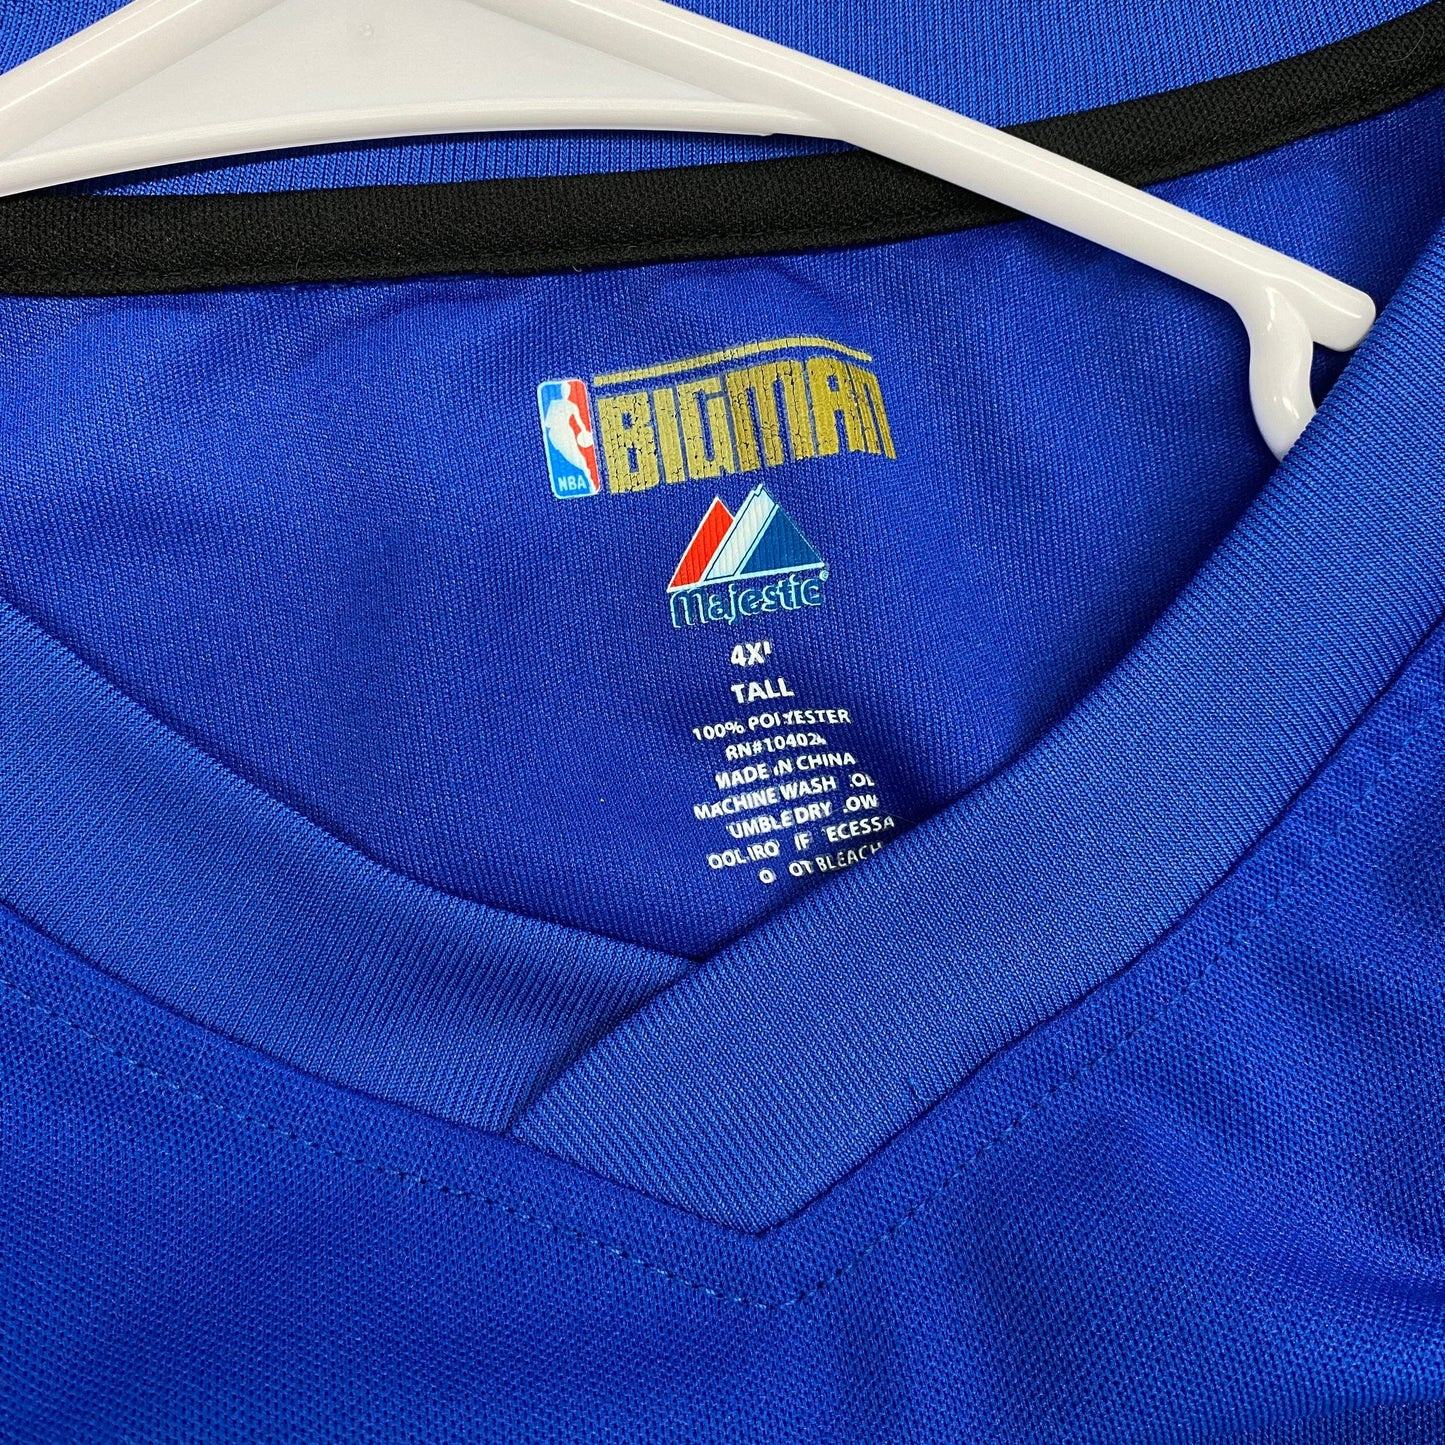 NBA BIGMAN Majestic Mens Size 4XL Tall Blue ‘Orlando Magic’ T-Shirt*